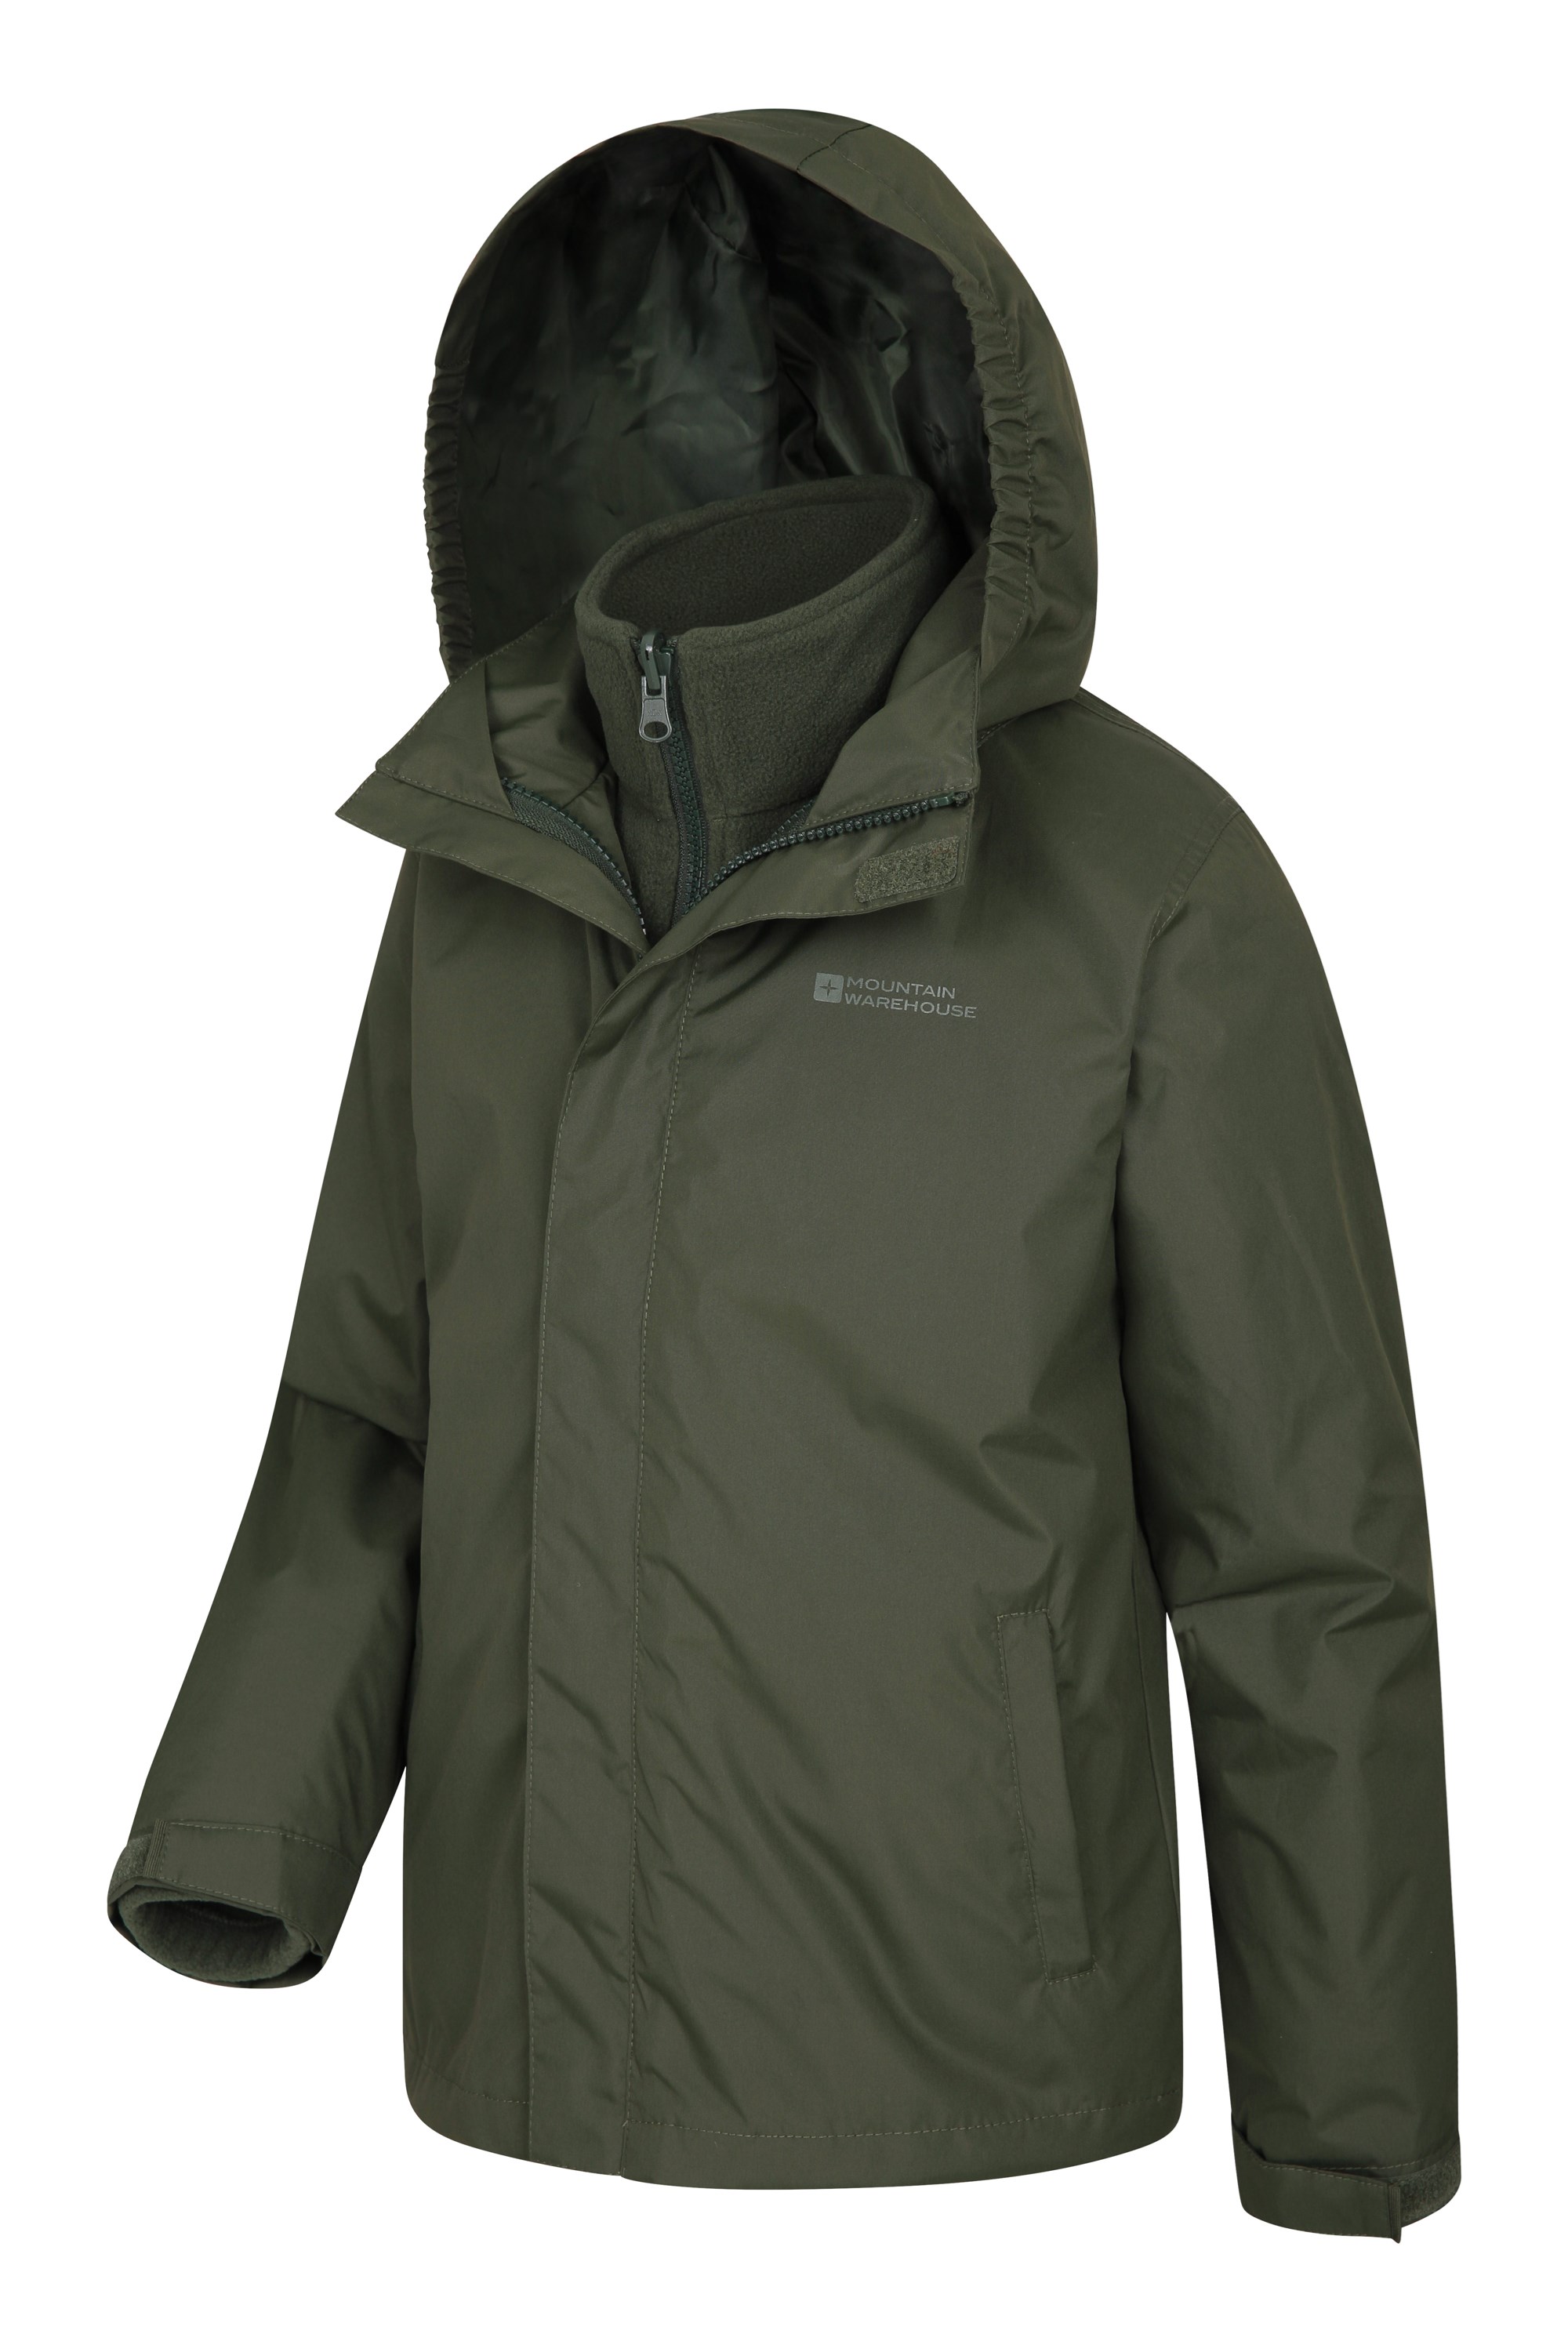 Detachable Inner Jacket Packaway Hood Kids Coat Hiking for Winter Walking Mountain Warehouse Fell Kids 3 in 1 Jacket Water Resistant Triclimate Rain Jacket